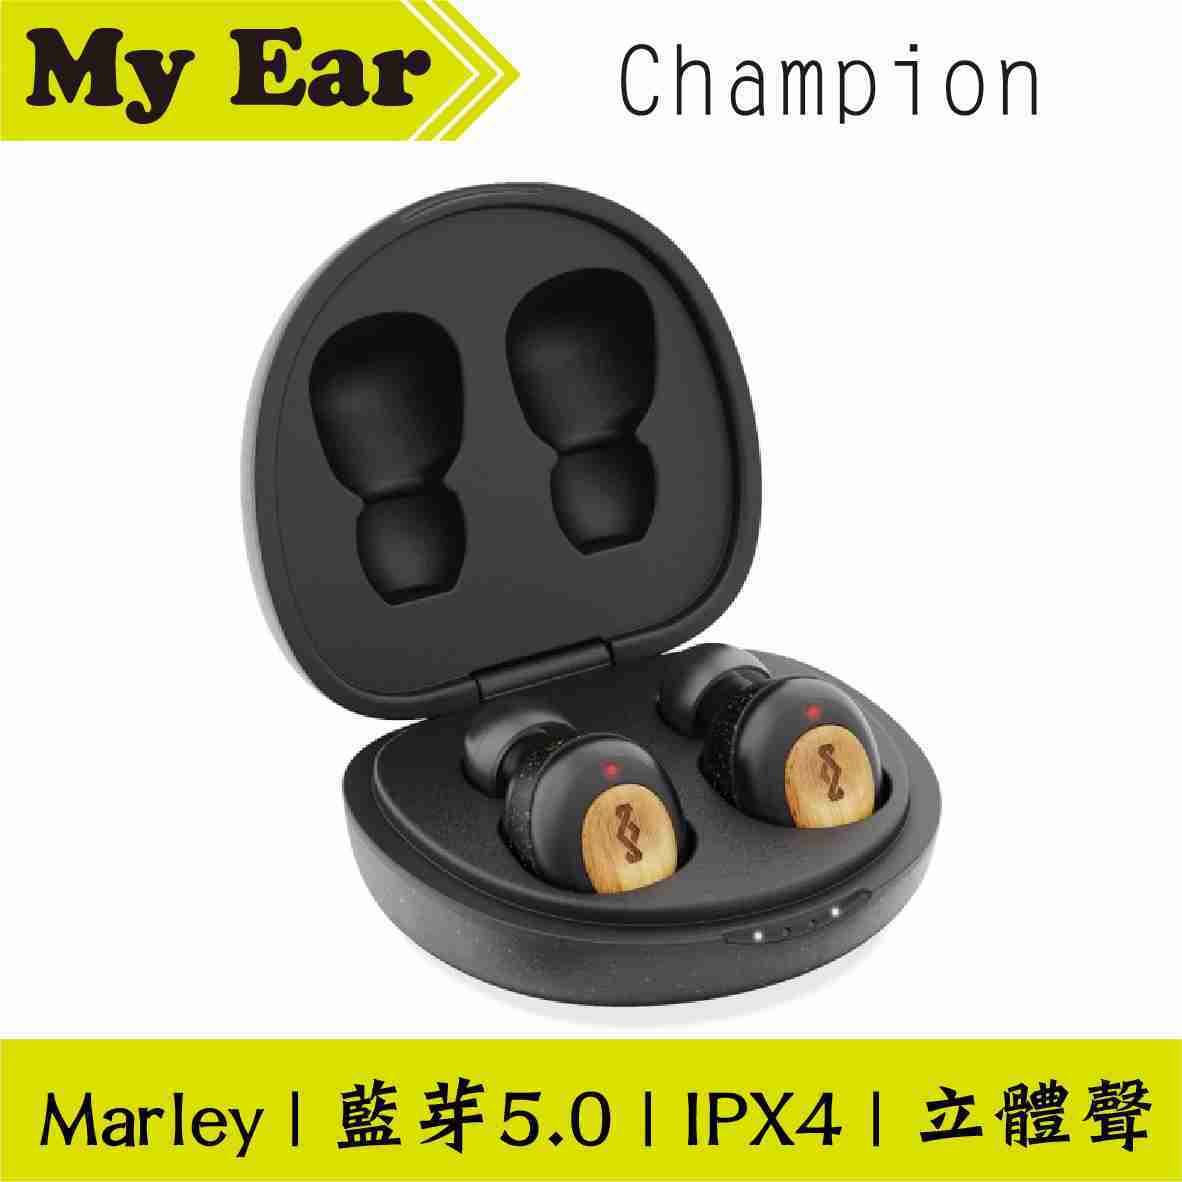 Marley Champion 支援單耳 IPX4 防水 真無線 藍芽 耳機 | My Ear 耳機專門店